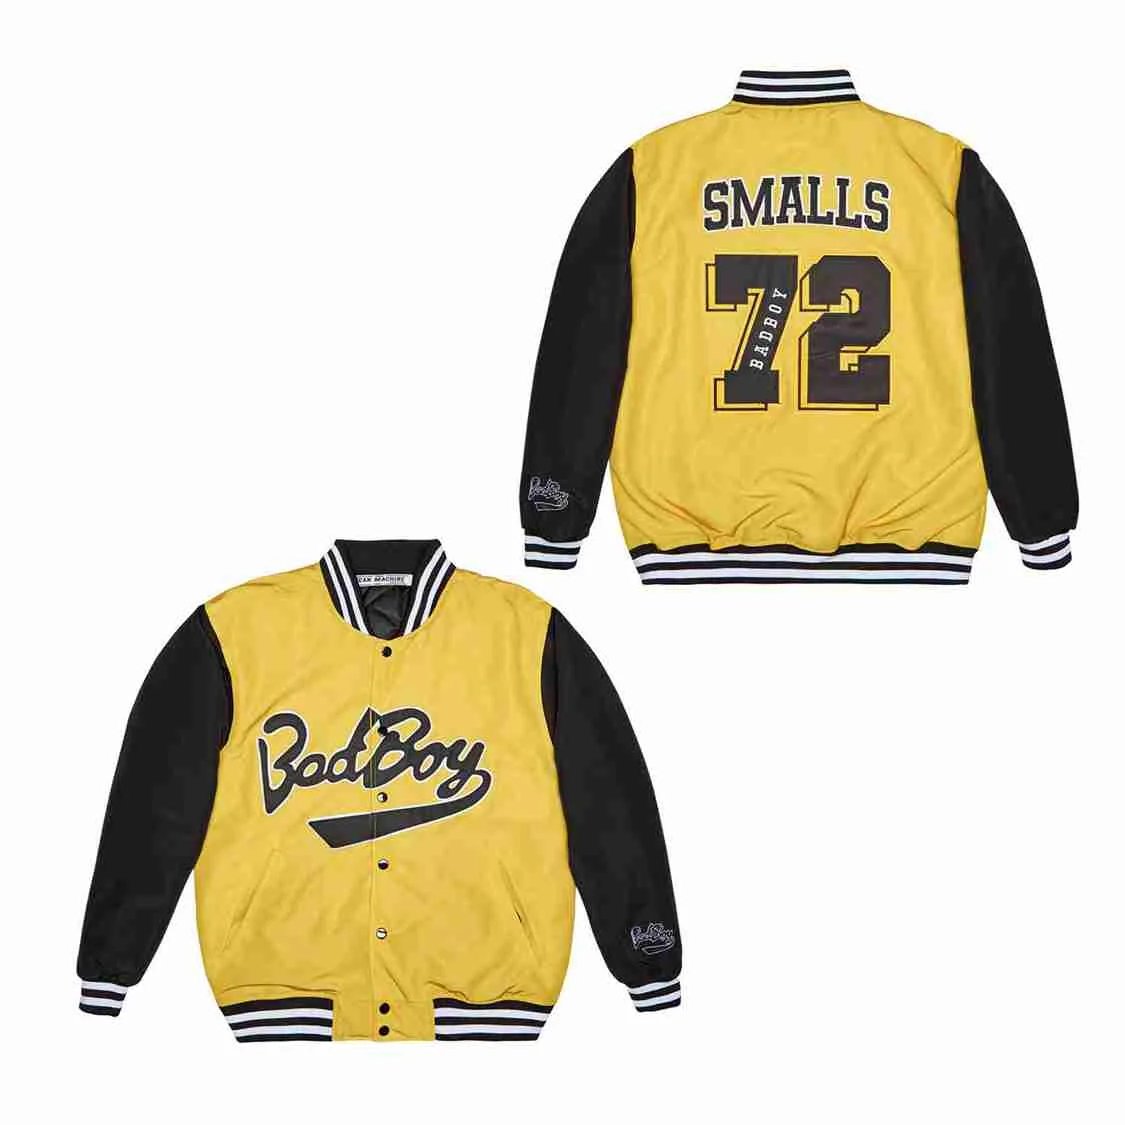 

BG American football Jacket BADBOY 72 SMALLS SATIN JACKET Embroidery sewing outdoor exercise coat yellow and black